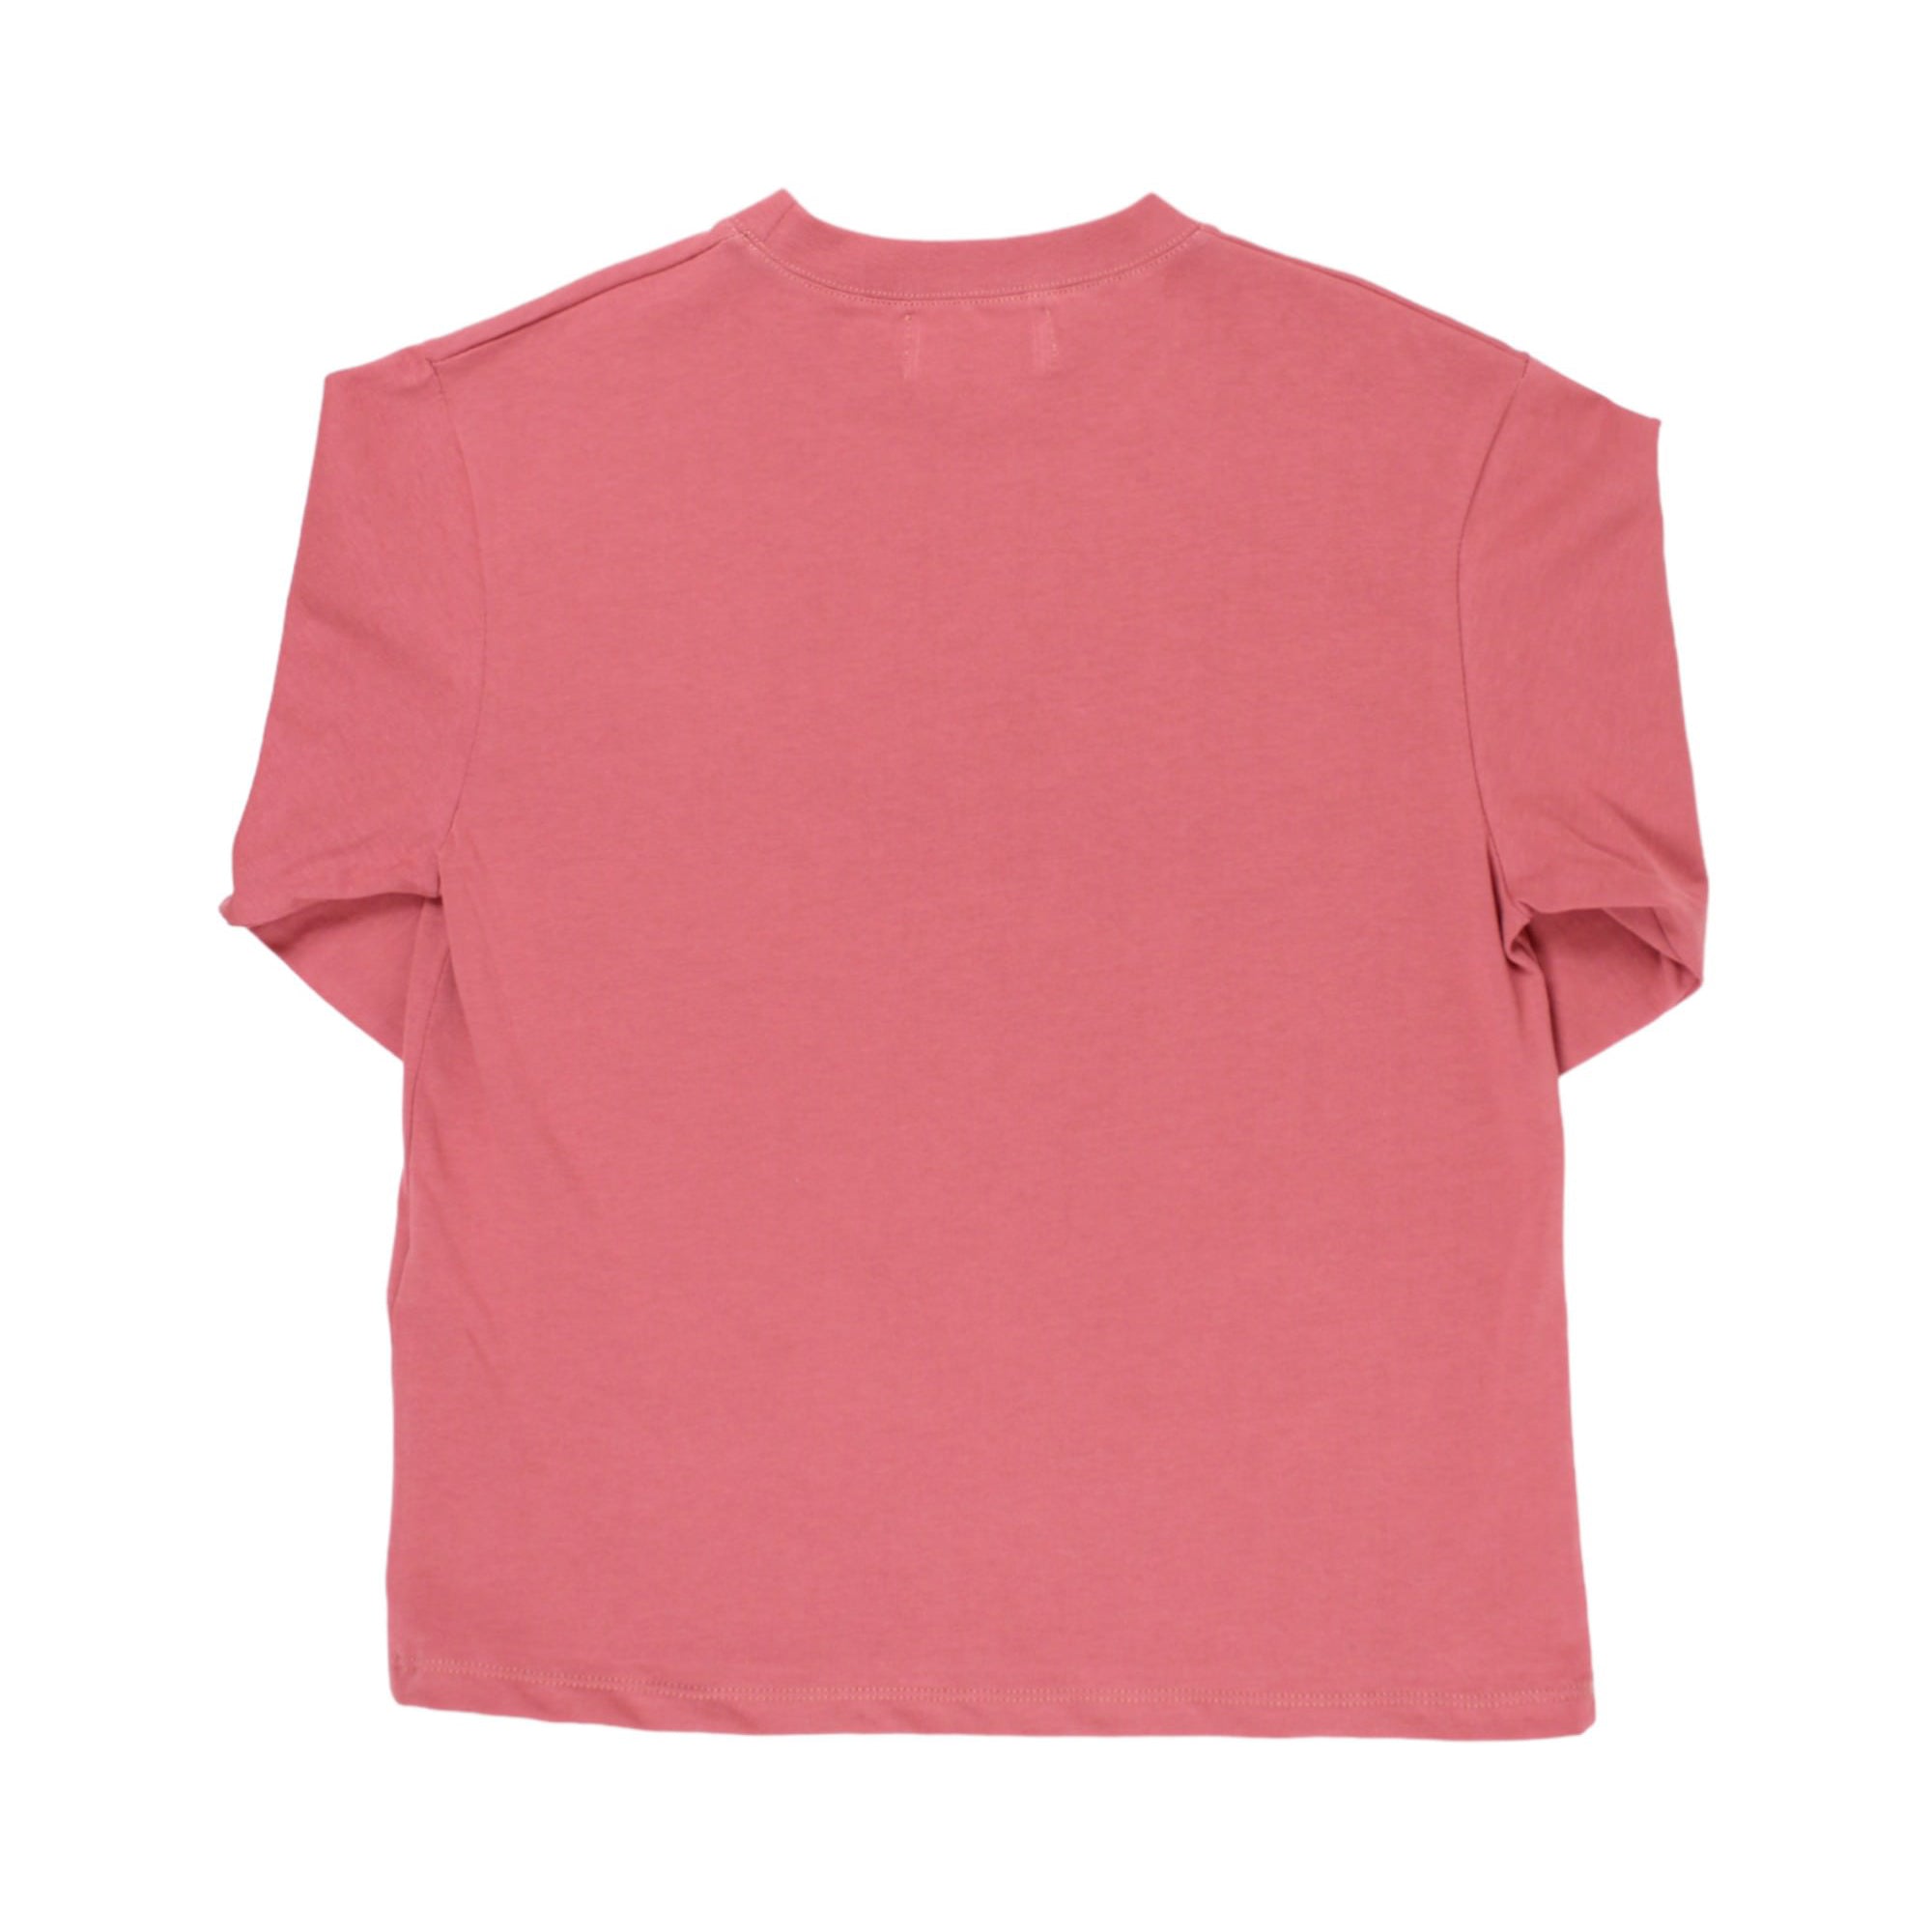 Boys & Girls Pink Cotton T-Shirt